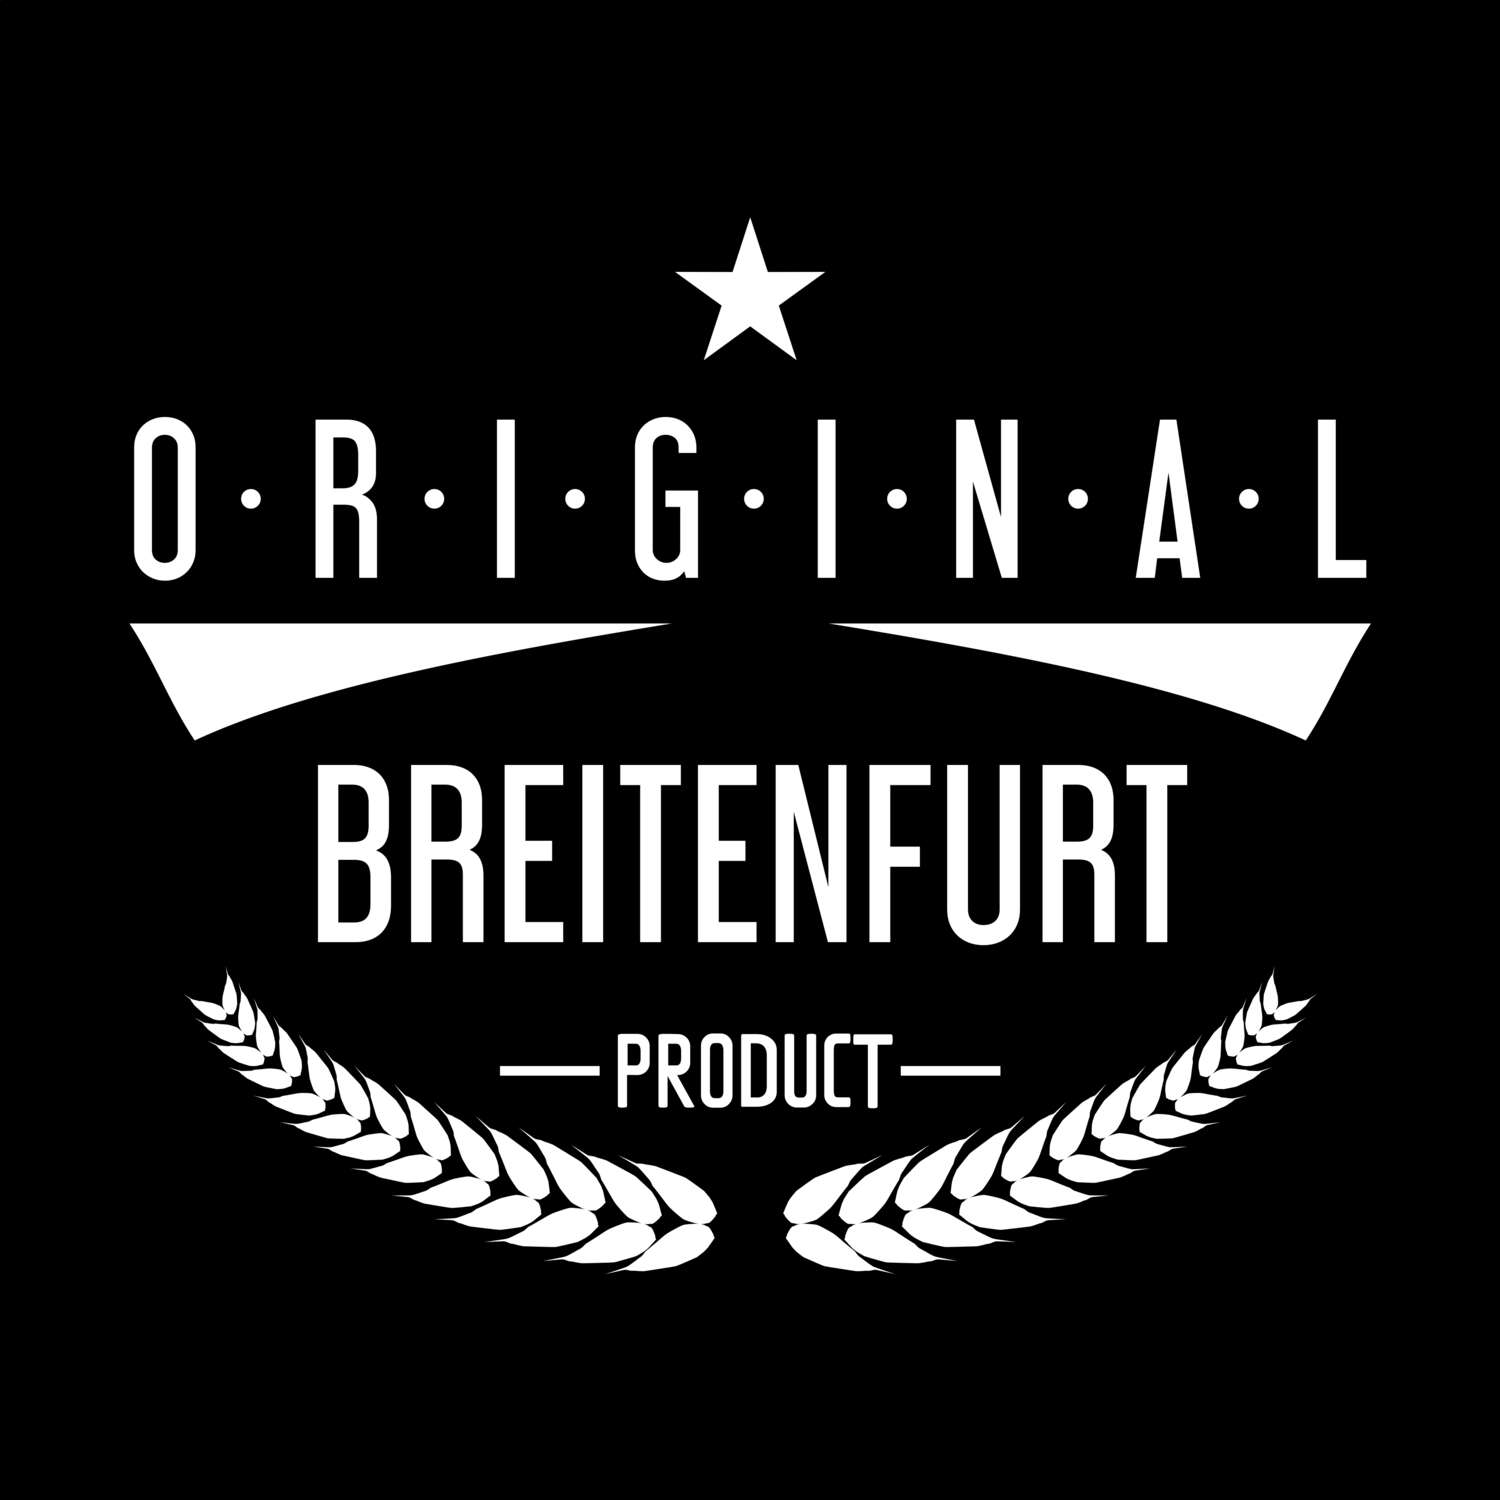 Breitenfurt T-Shirt »Original Product«